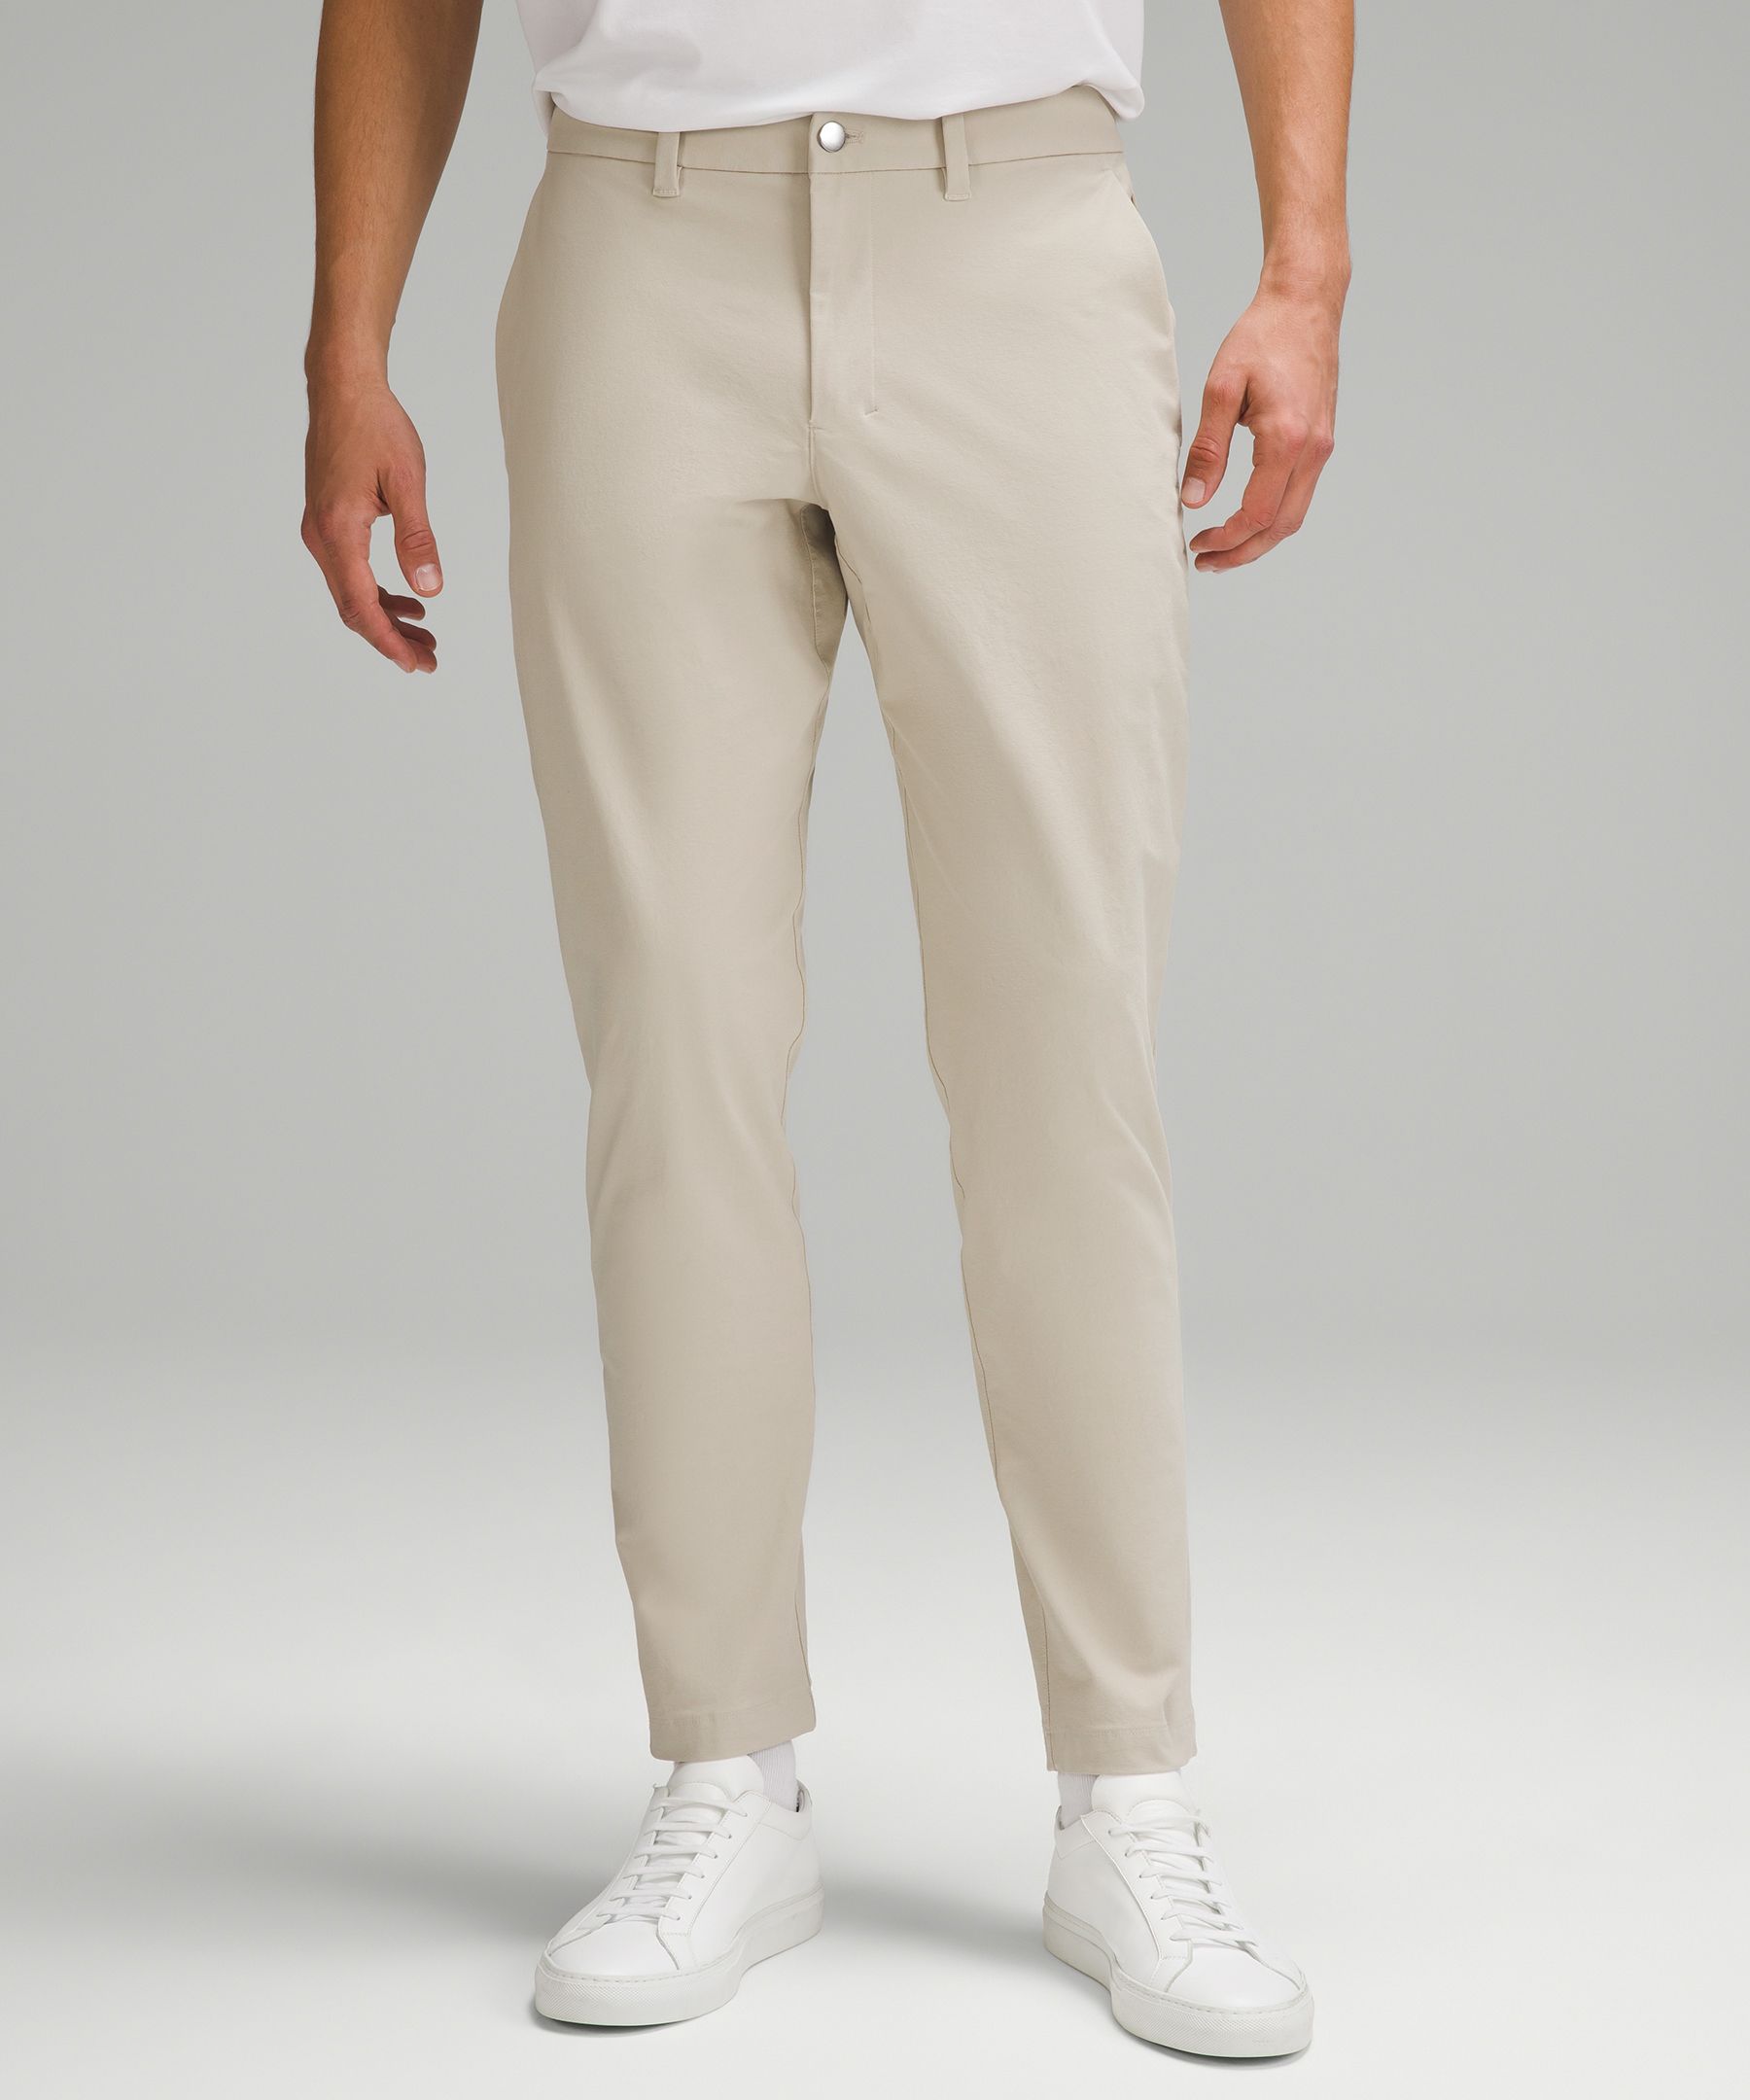 Men's Pants Similar To Lululemon Abc Pantone  International Society of  Precision Agriculture